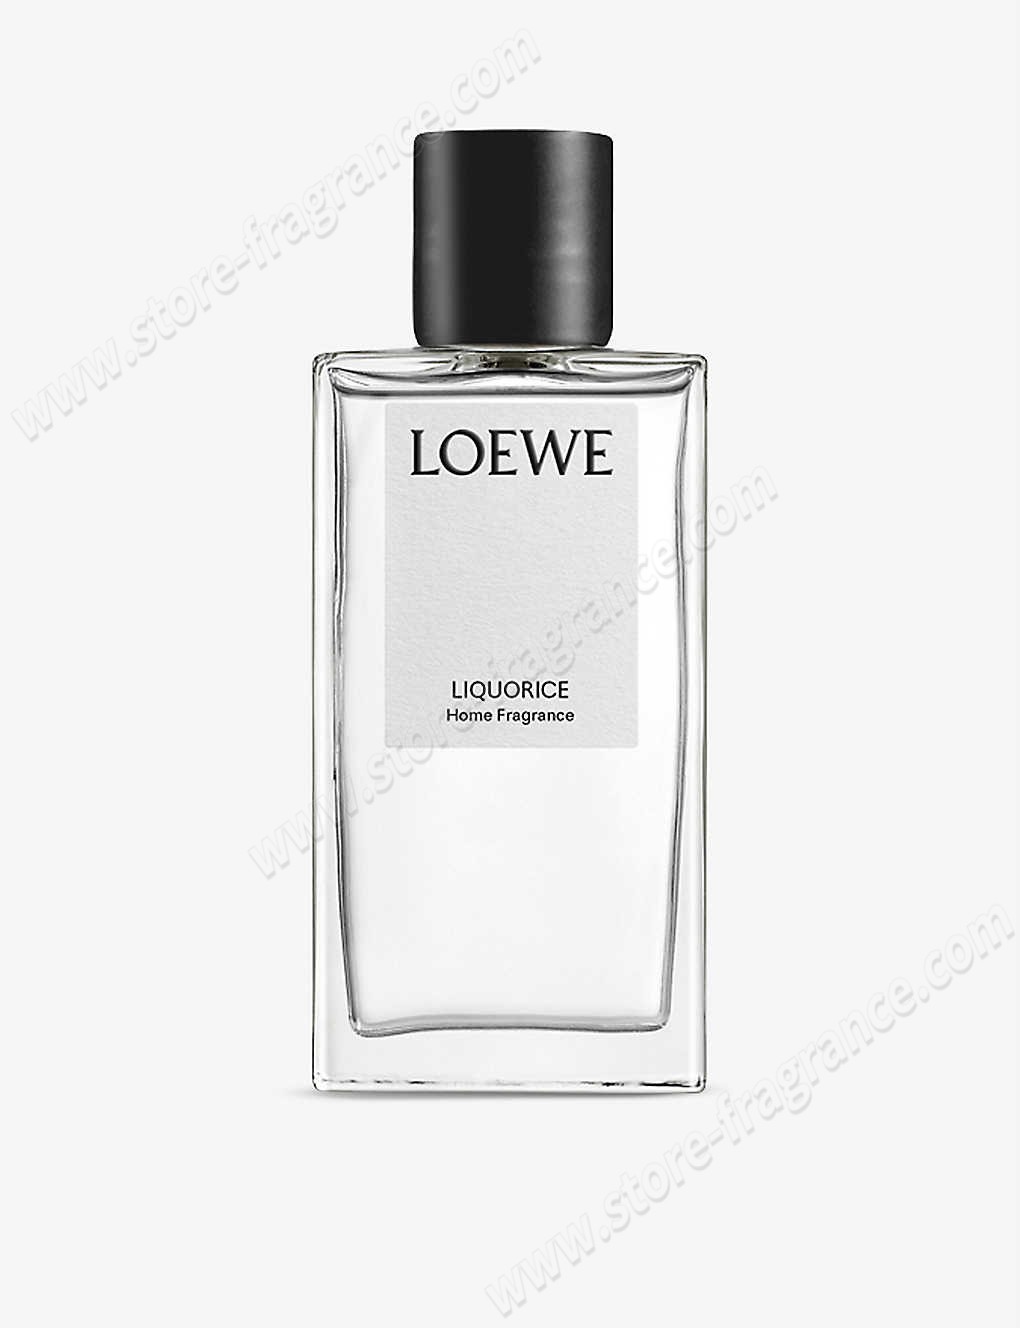 LOEWE/Liquorice room spray 150ml ✿ Discount Store - LOEWE/Liquorice room spray 150ml ✿ Discount Store